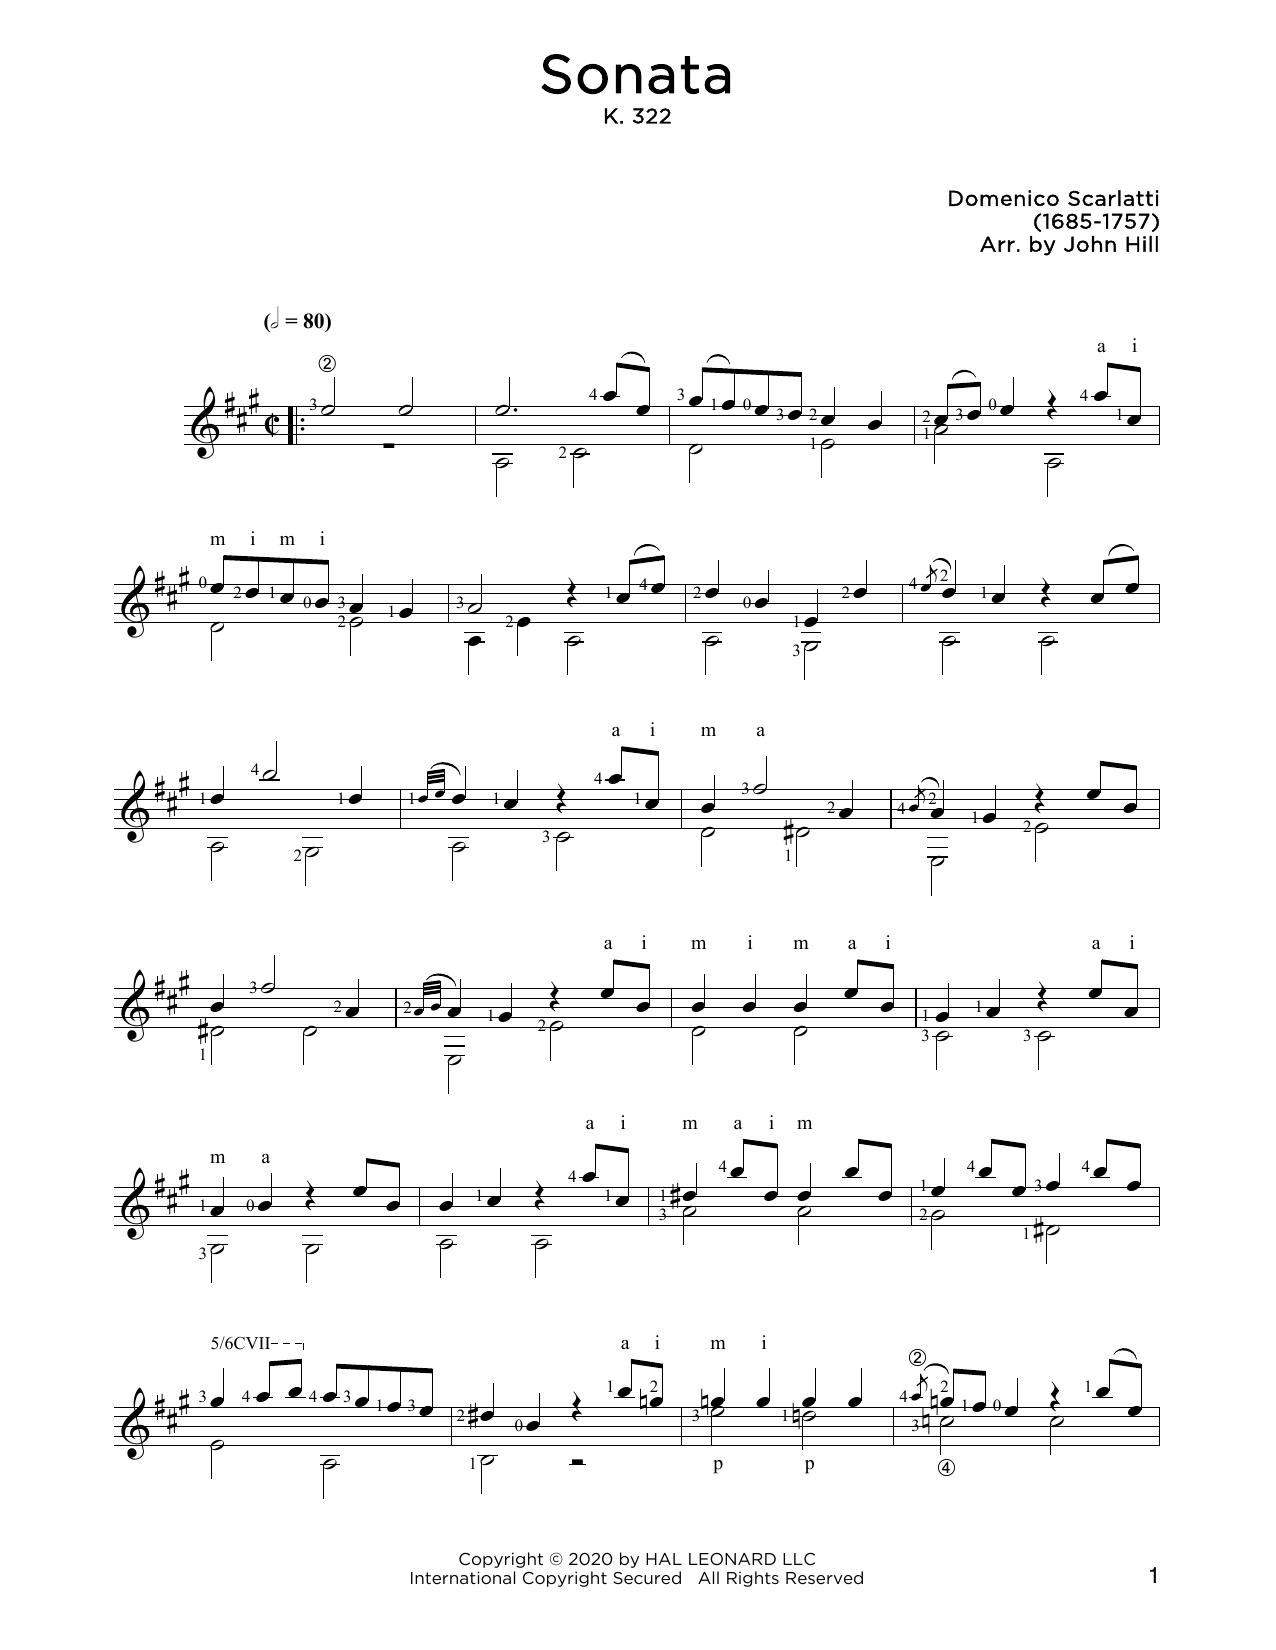 Domenico Scarlatti Sonata In A sheet music notes and chords arranged for Solo Guitar